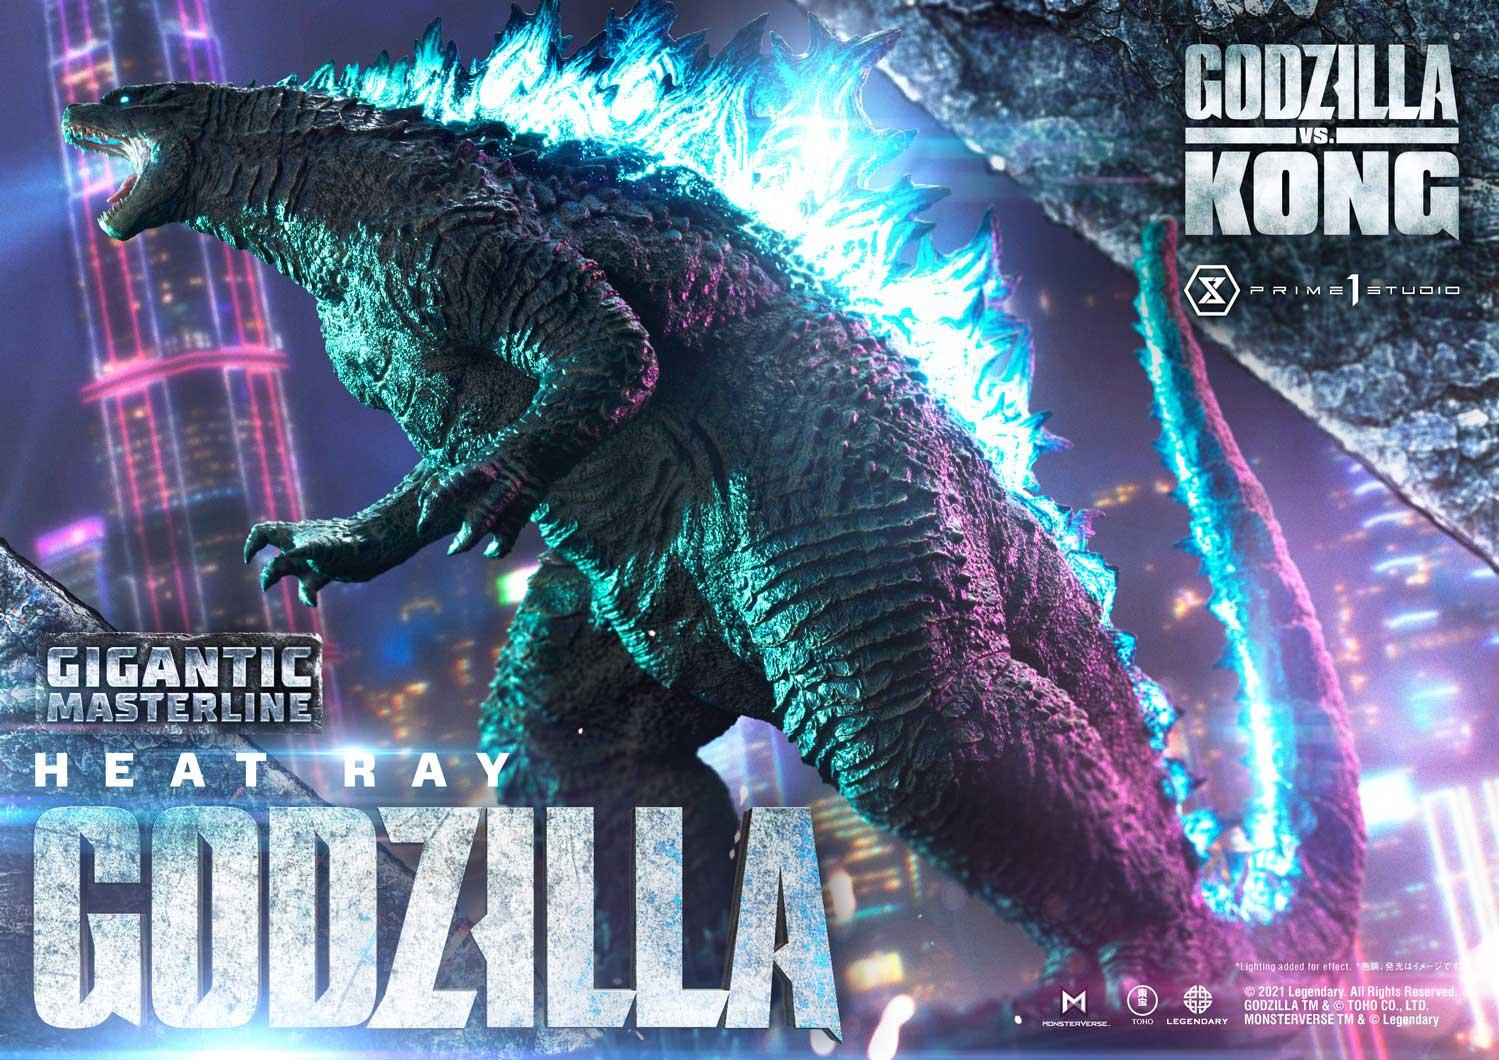 Earth is lighter than is seems to Godzilla. : r/GODZILLA